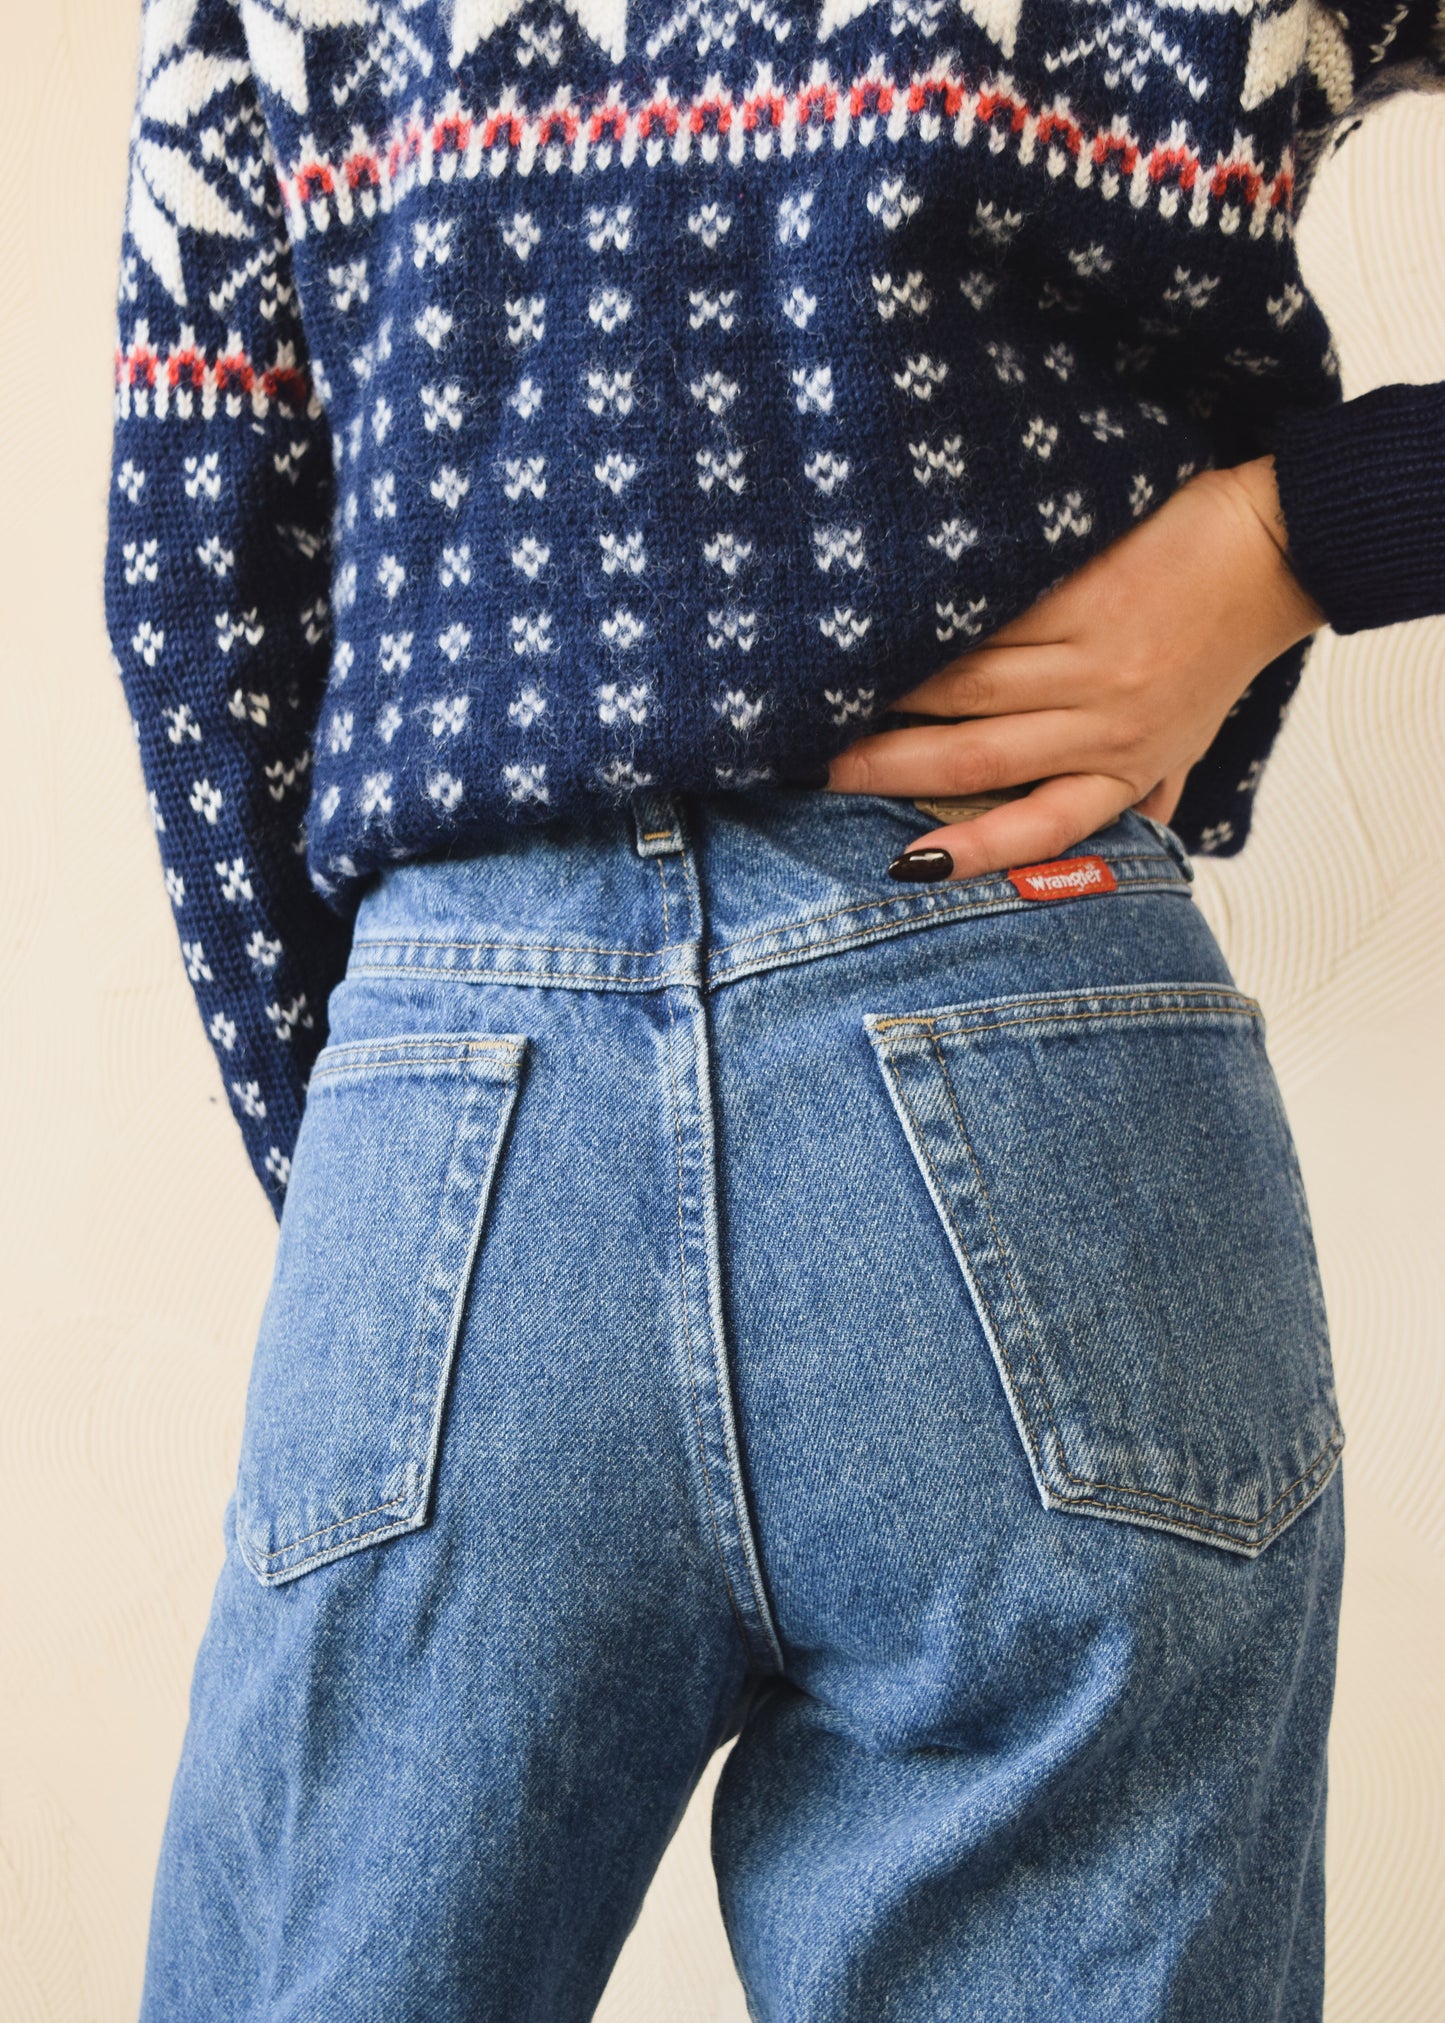 Mod Wrangler Denim Jeans (29)